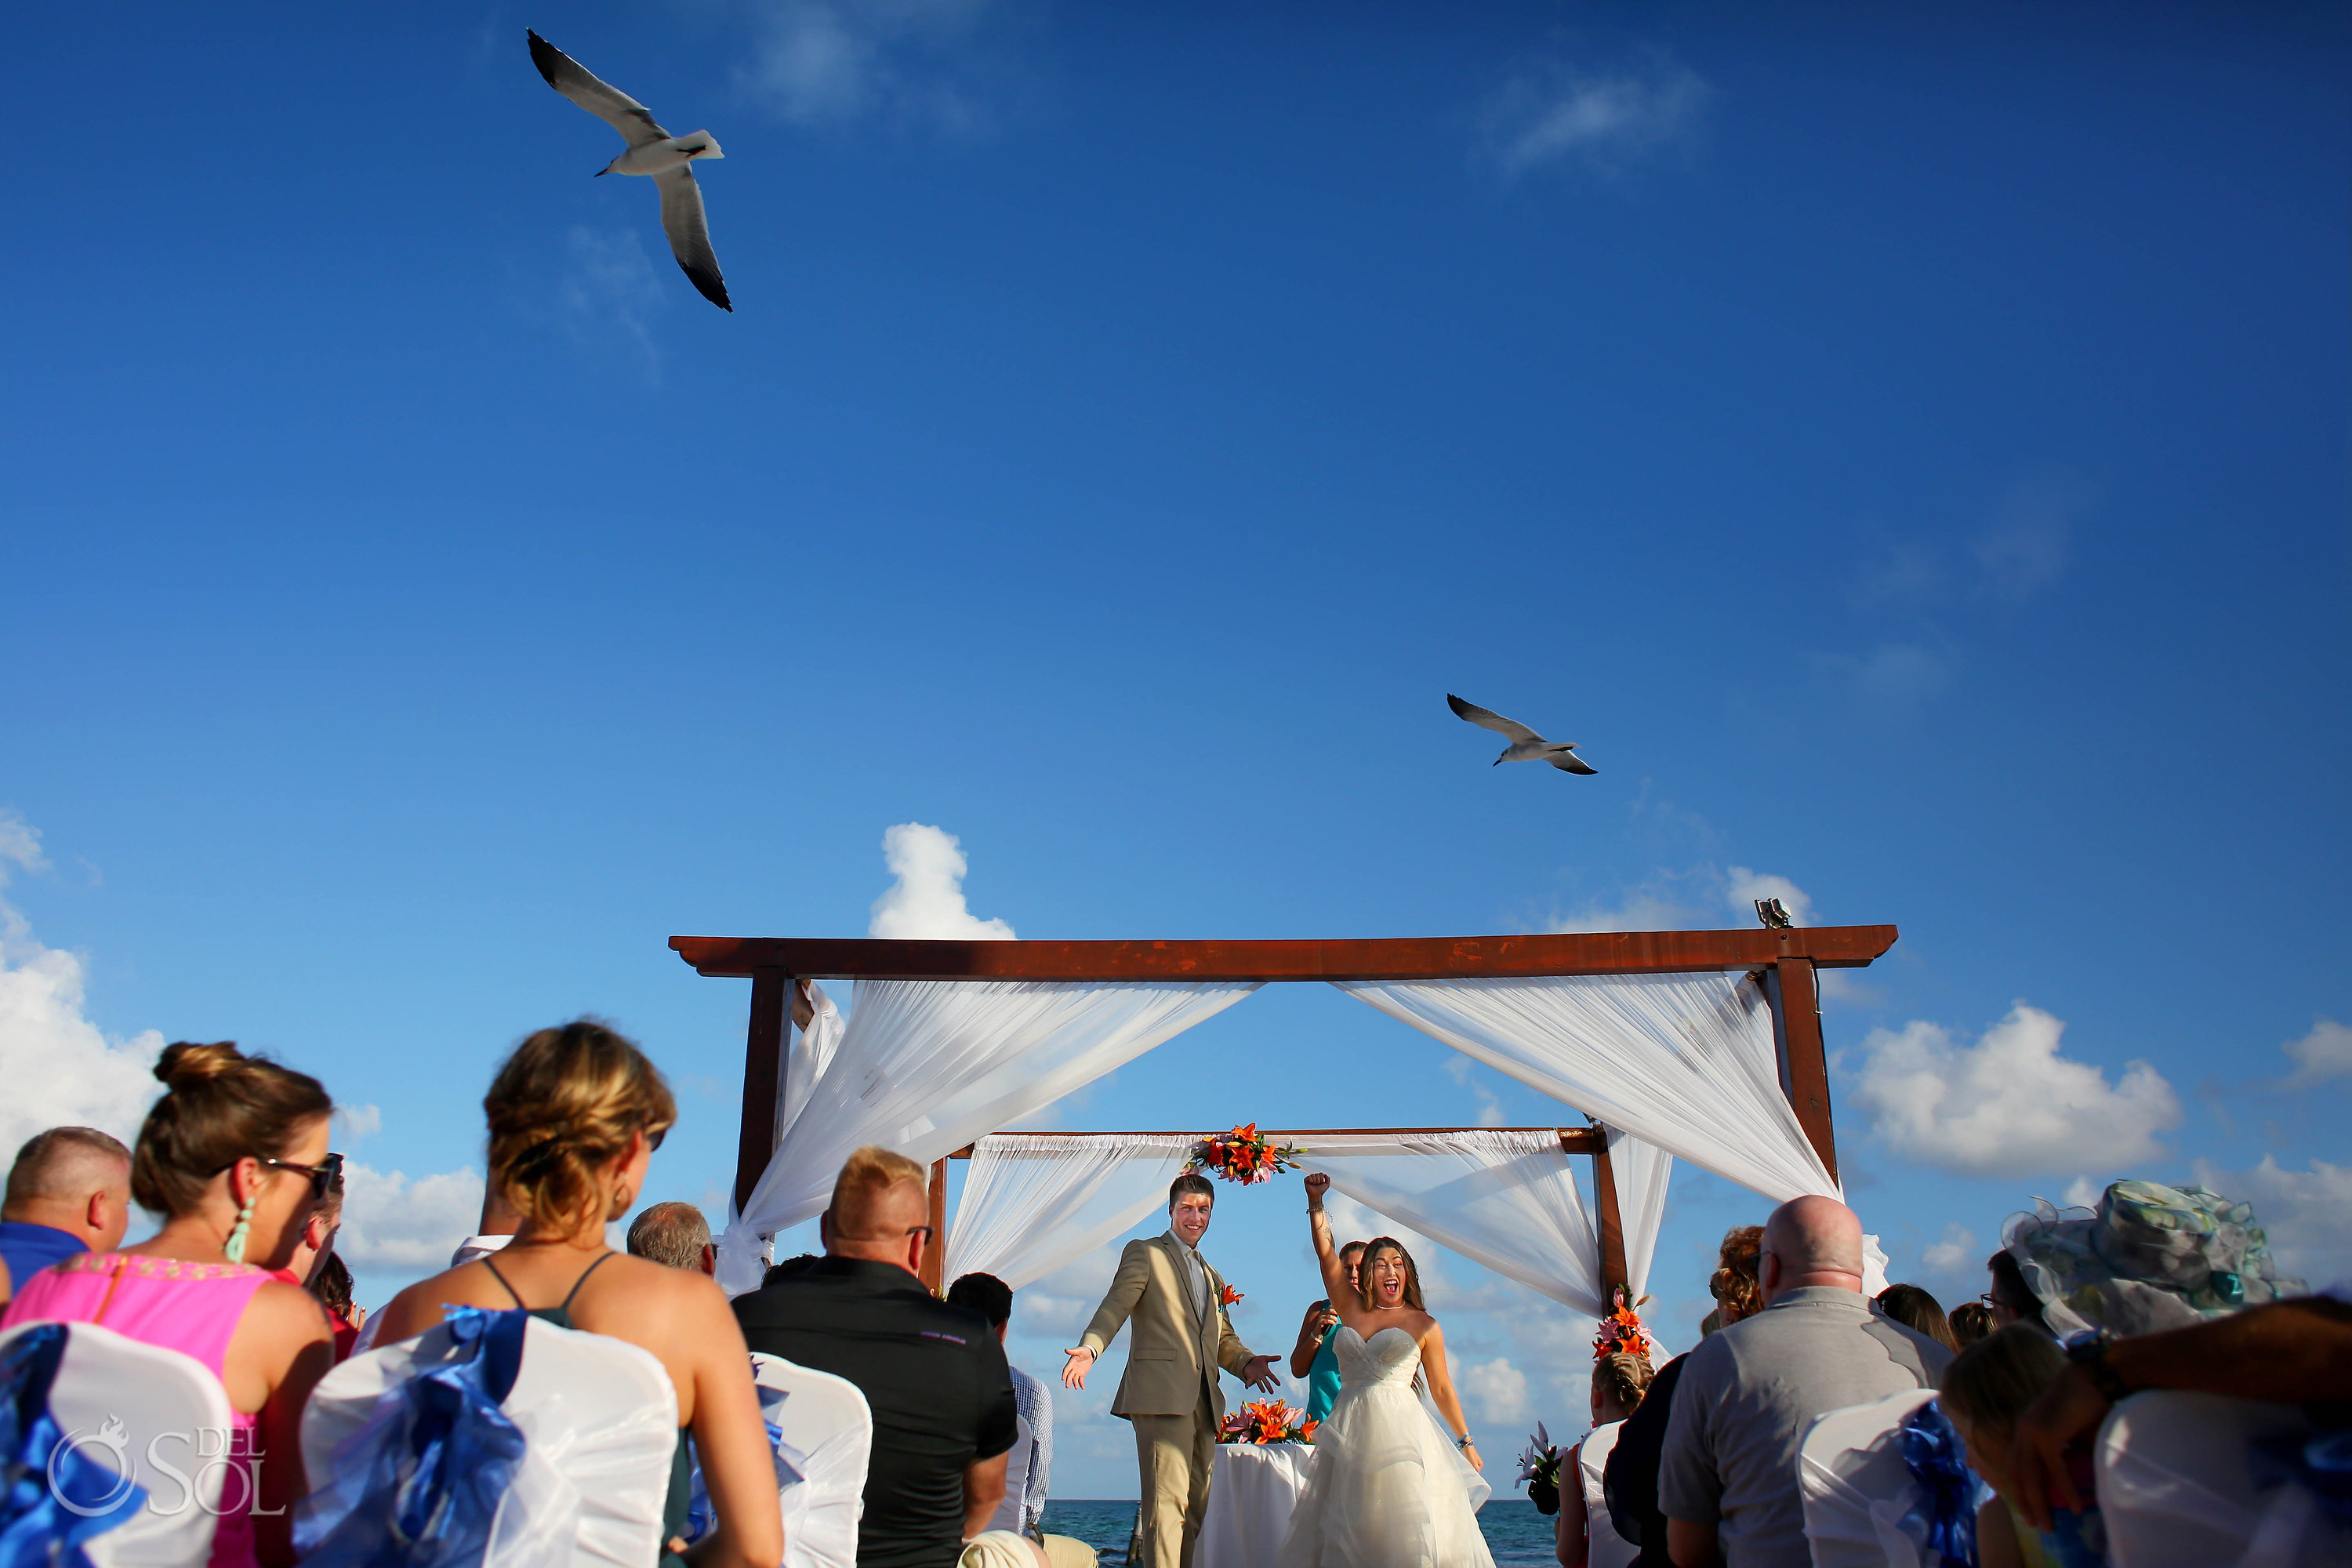 Seagulls flying high in the blue sky over wedding gazebo where bride and groom are celebrating #TravelForLove